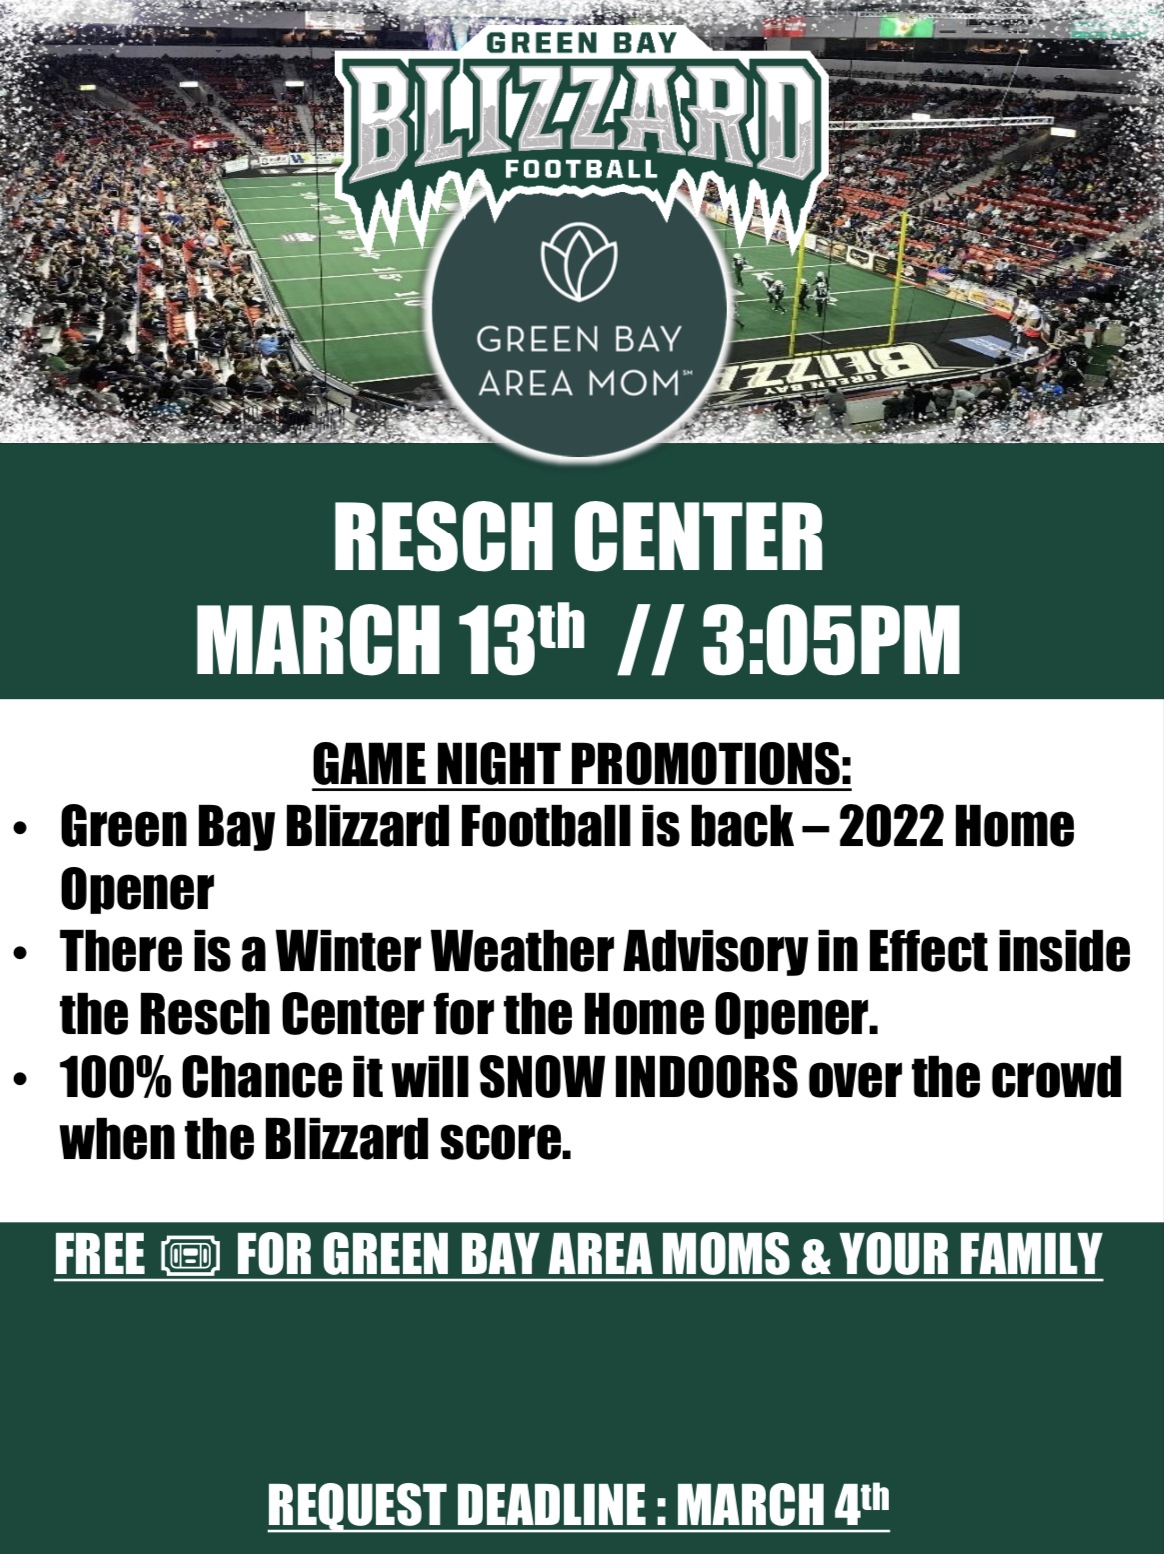 Green Bay Blizzard Football & Green Bay Area Mom promotion